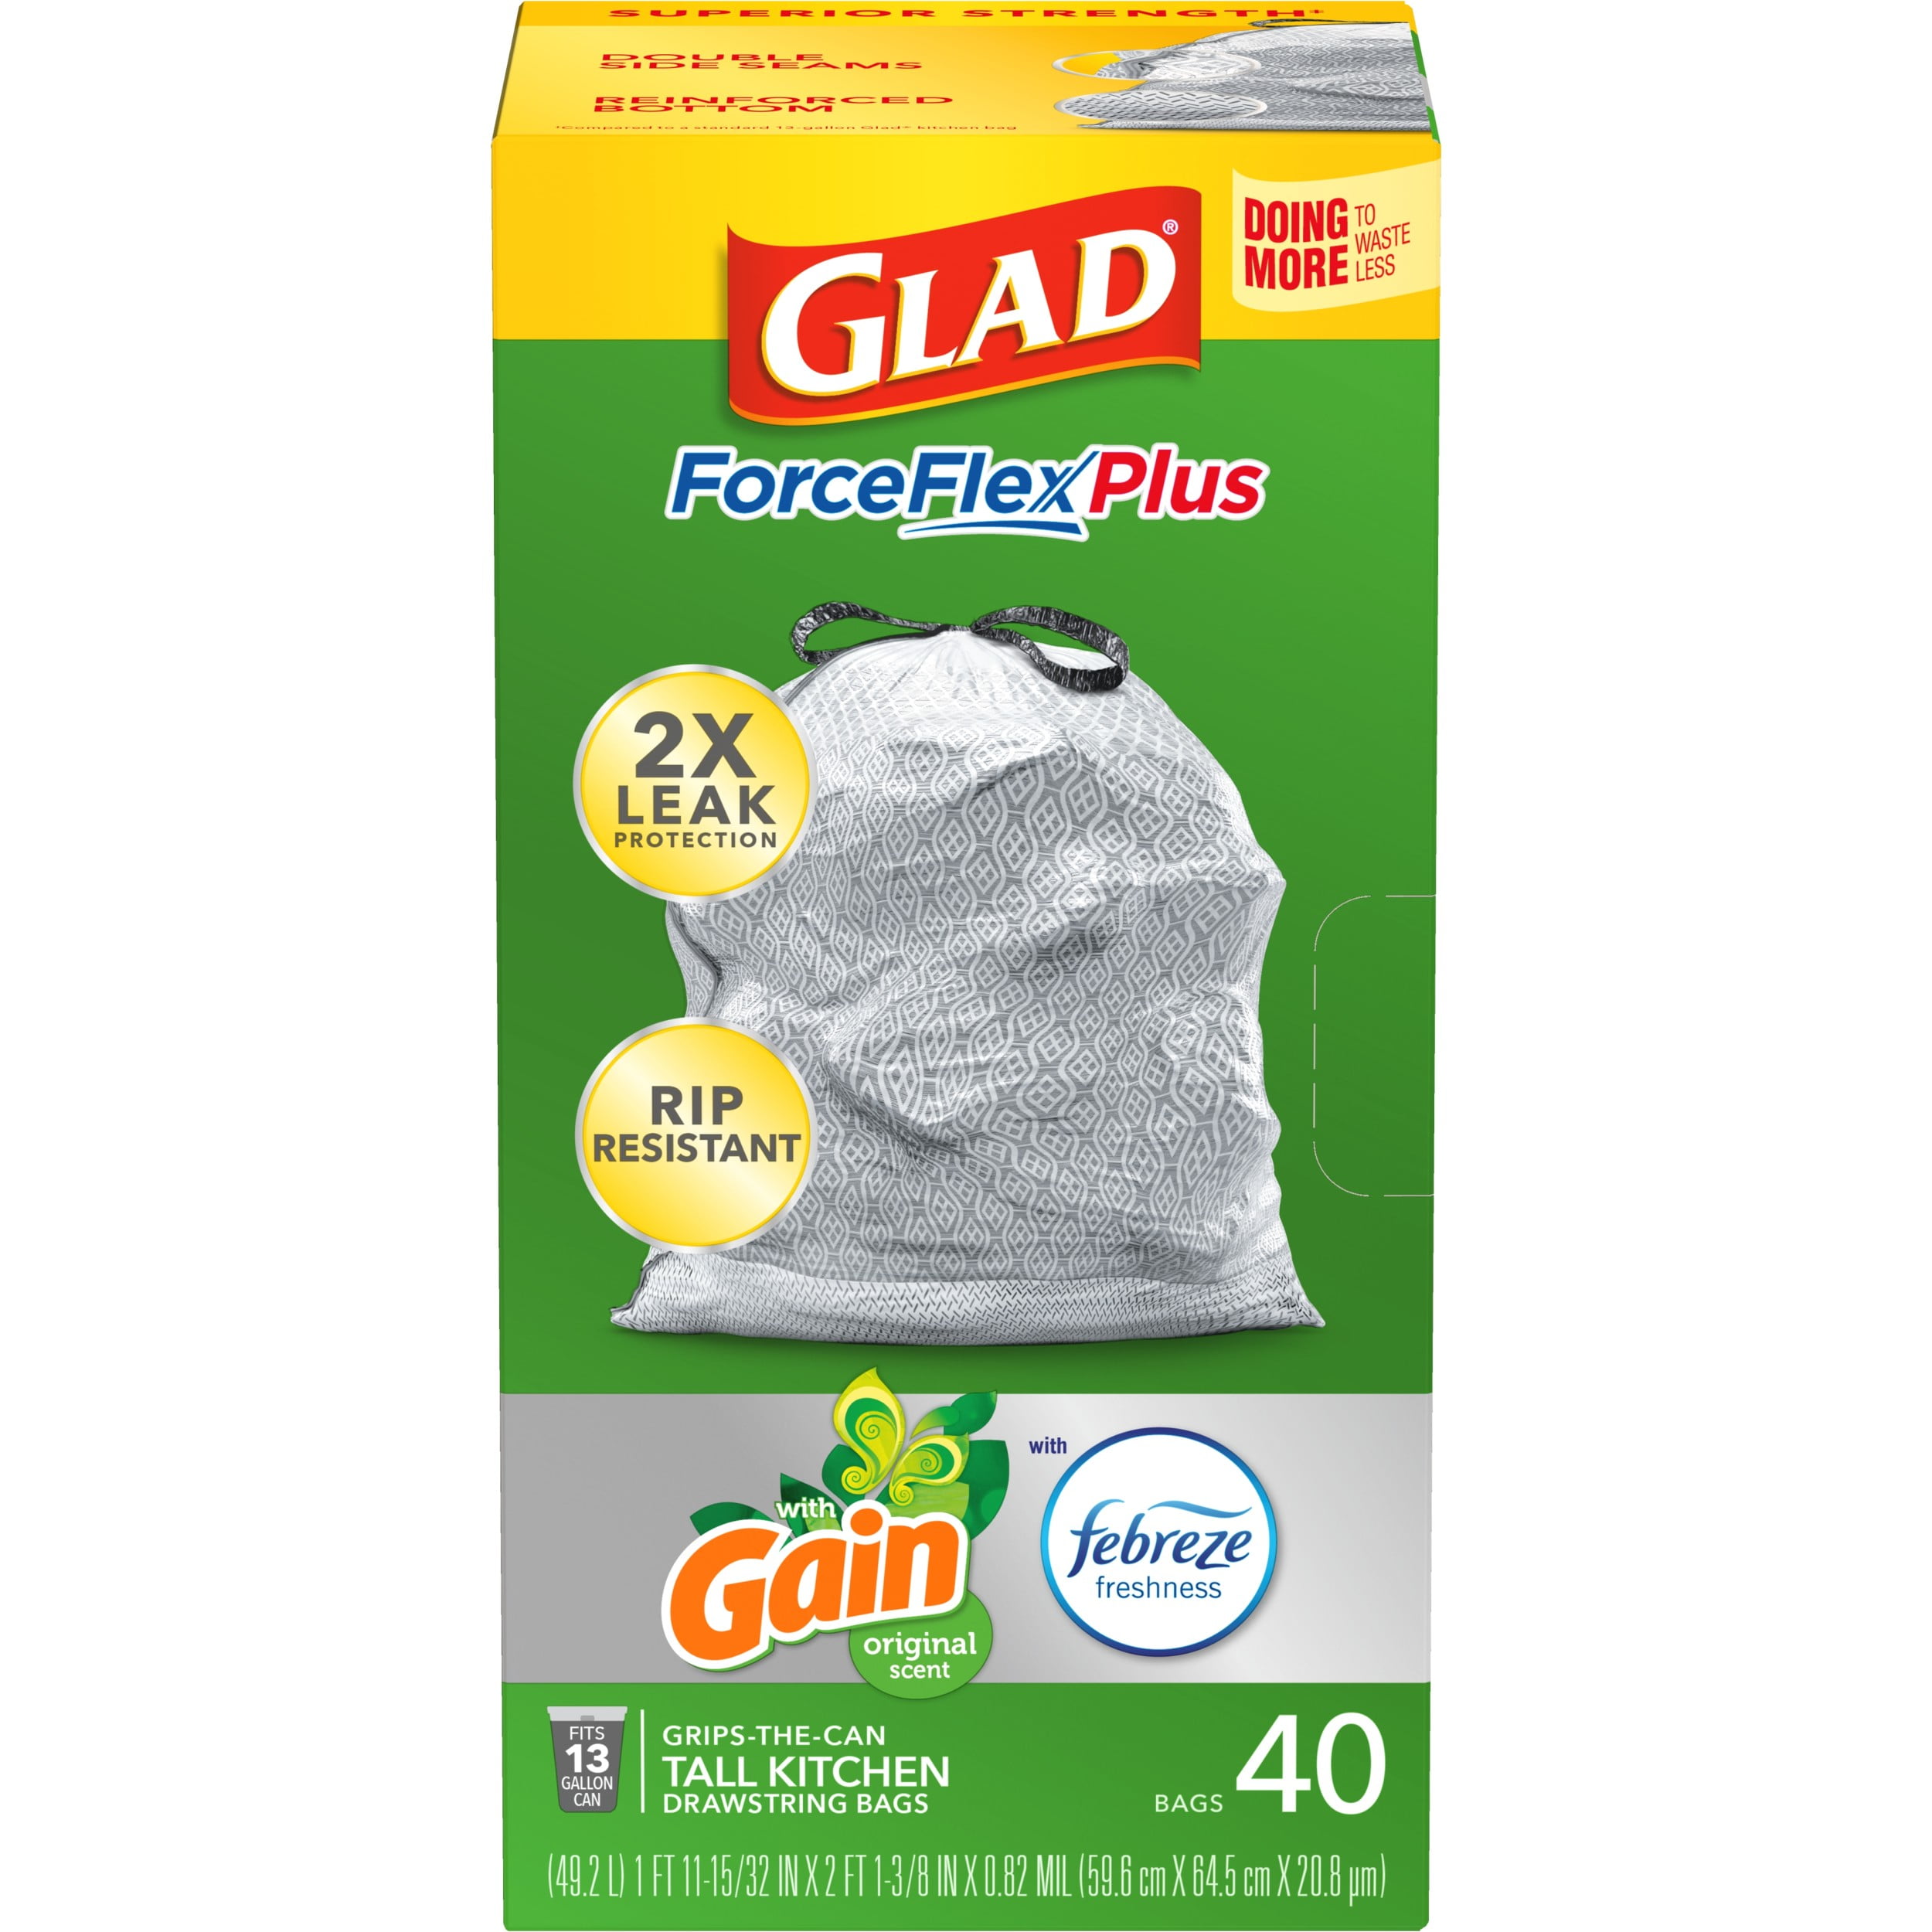 Glad Original Gain Trash Bags - 50 count